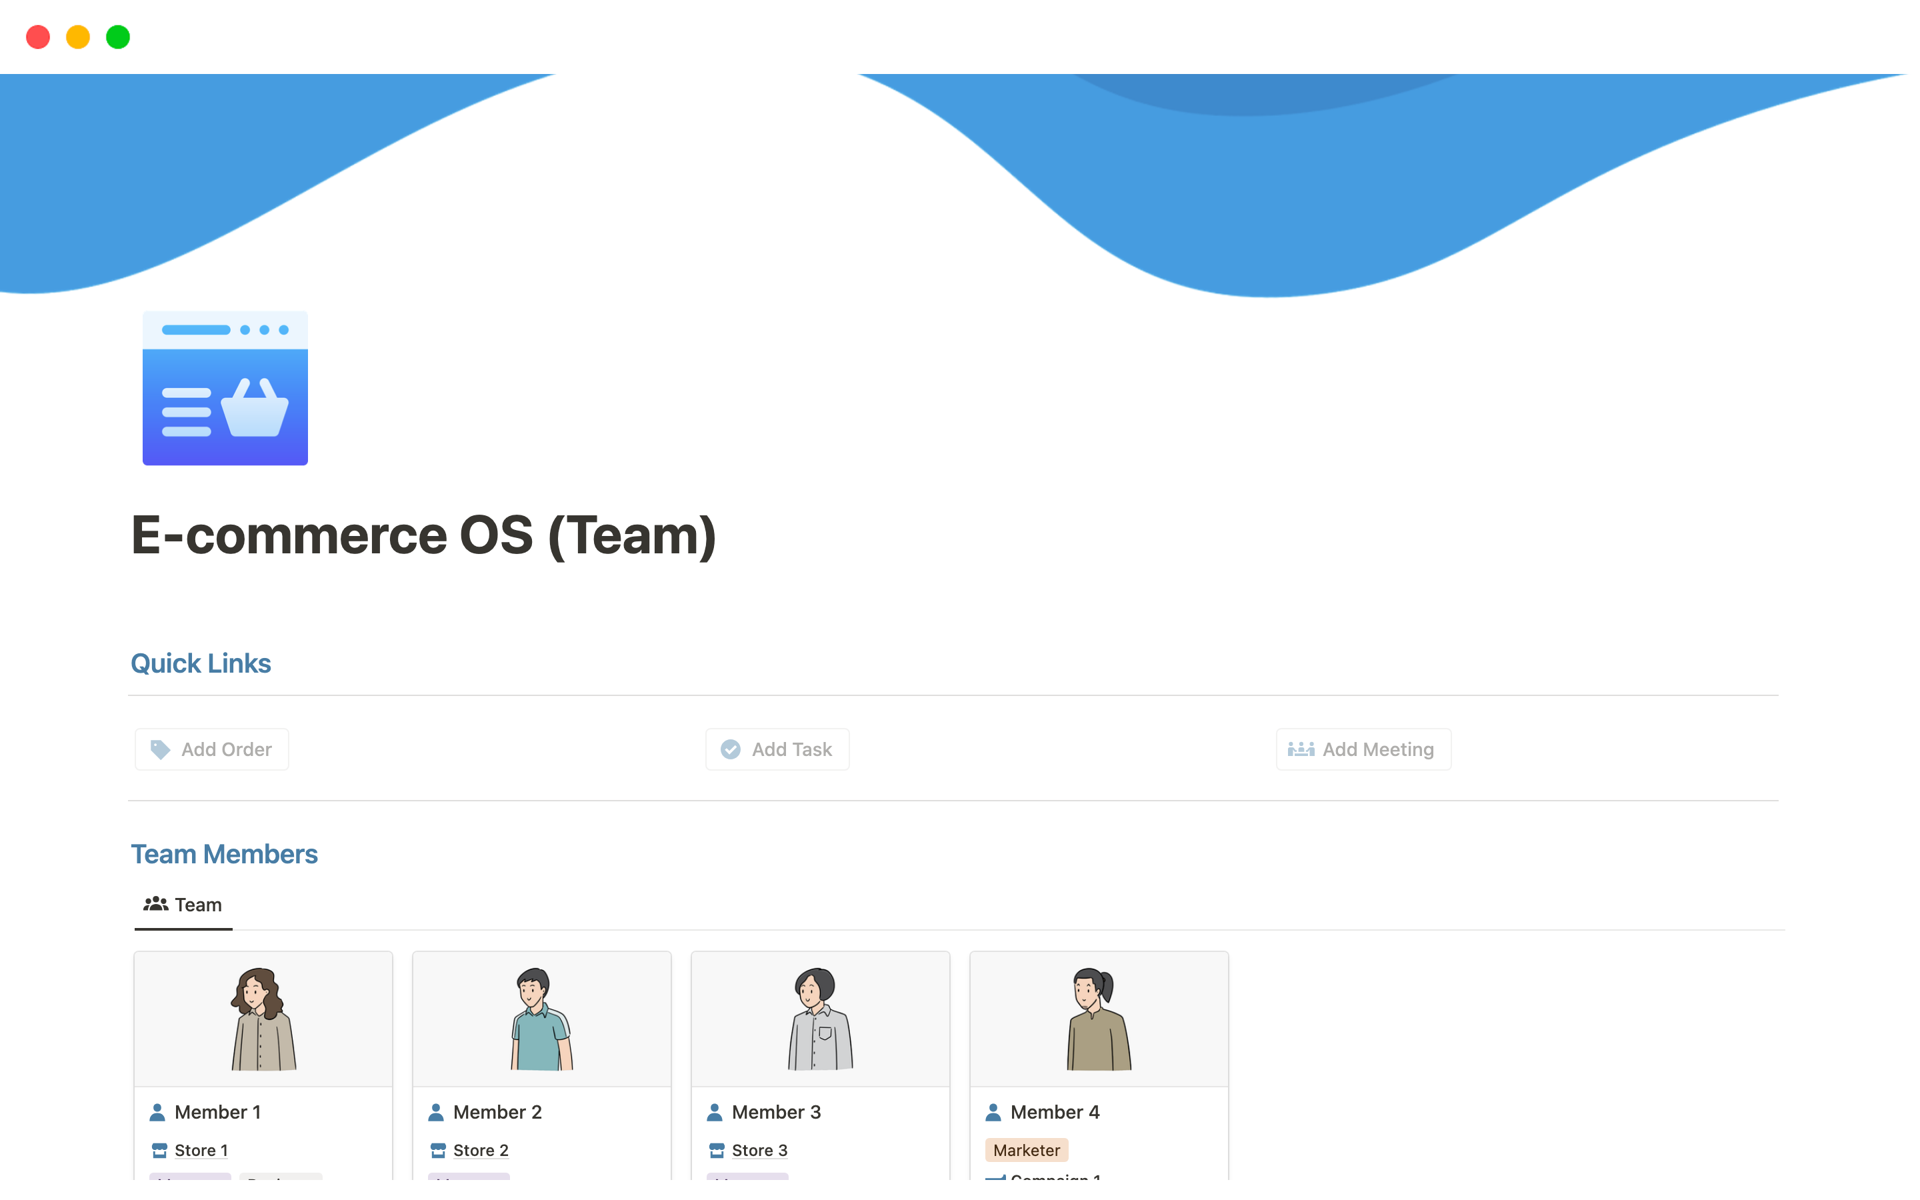 Vista previa de plantilla para E-commerce OS (Team)